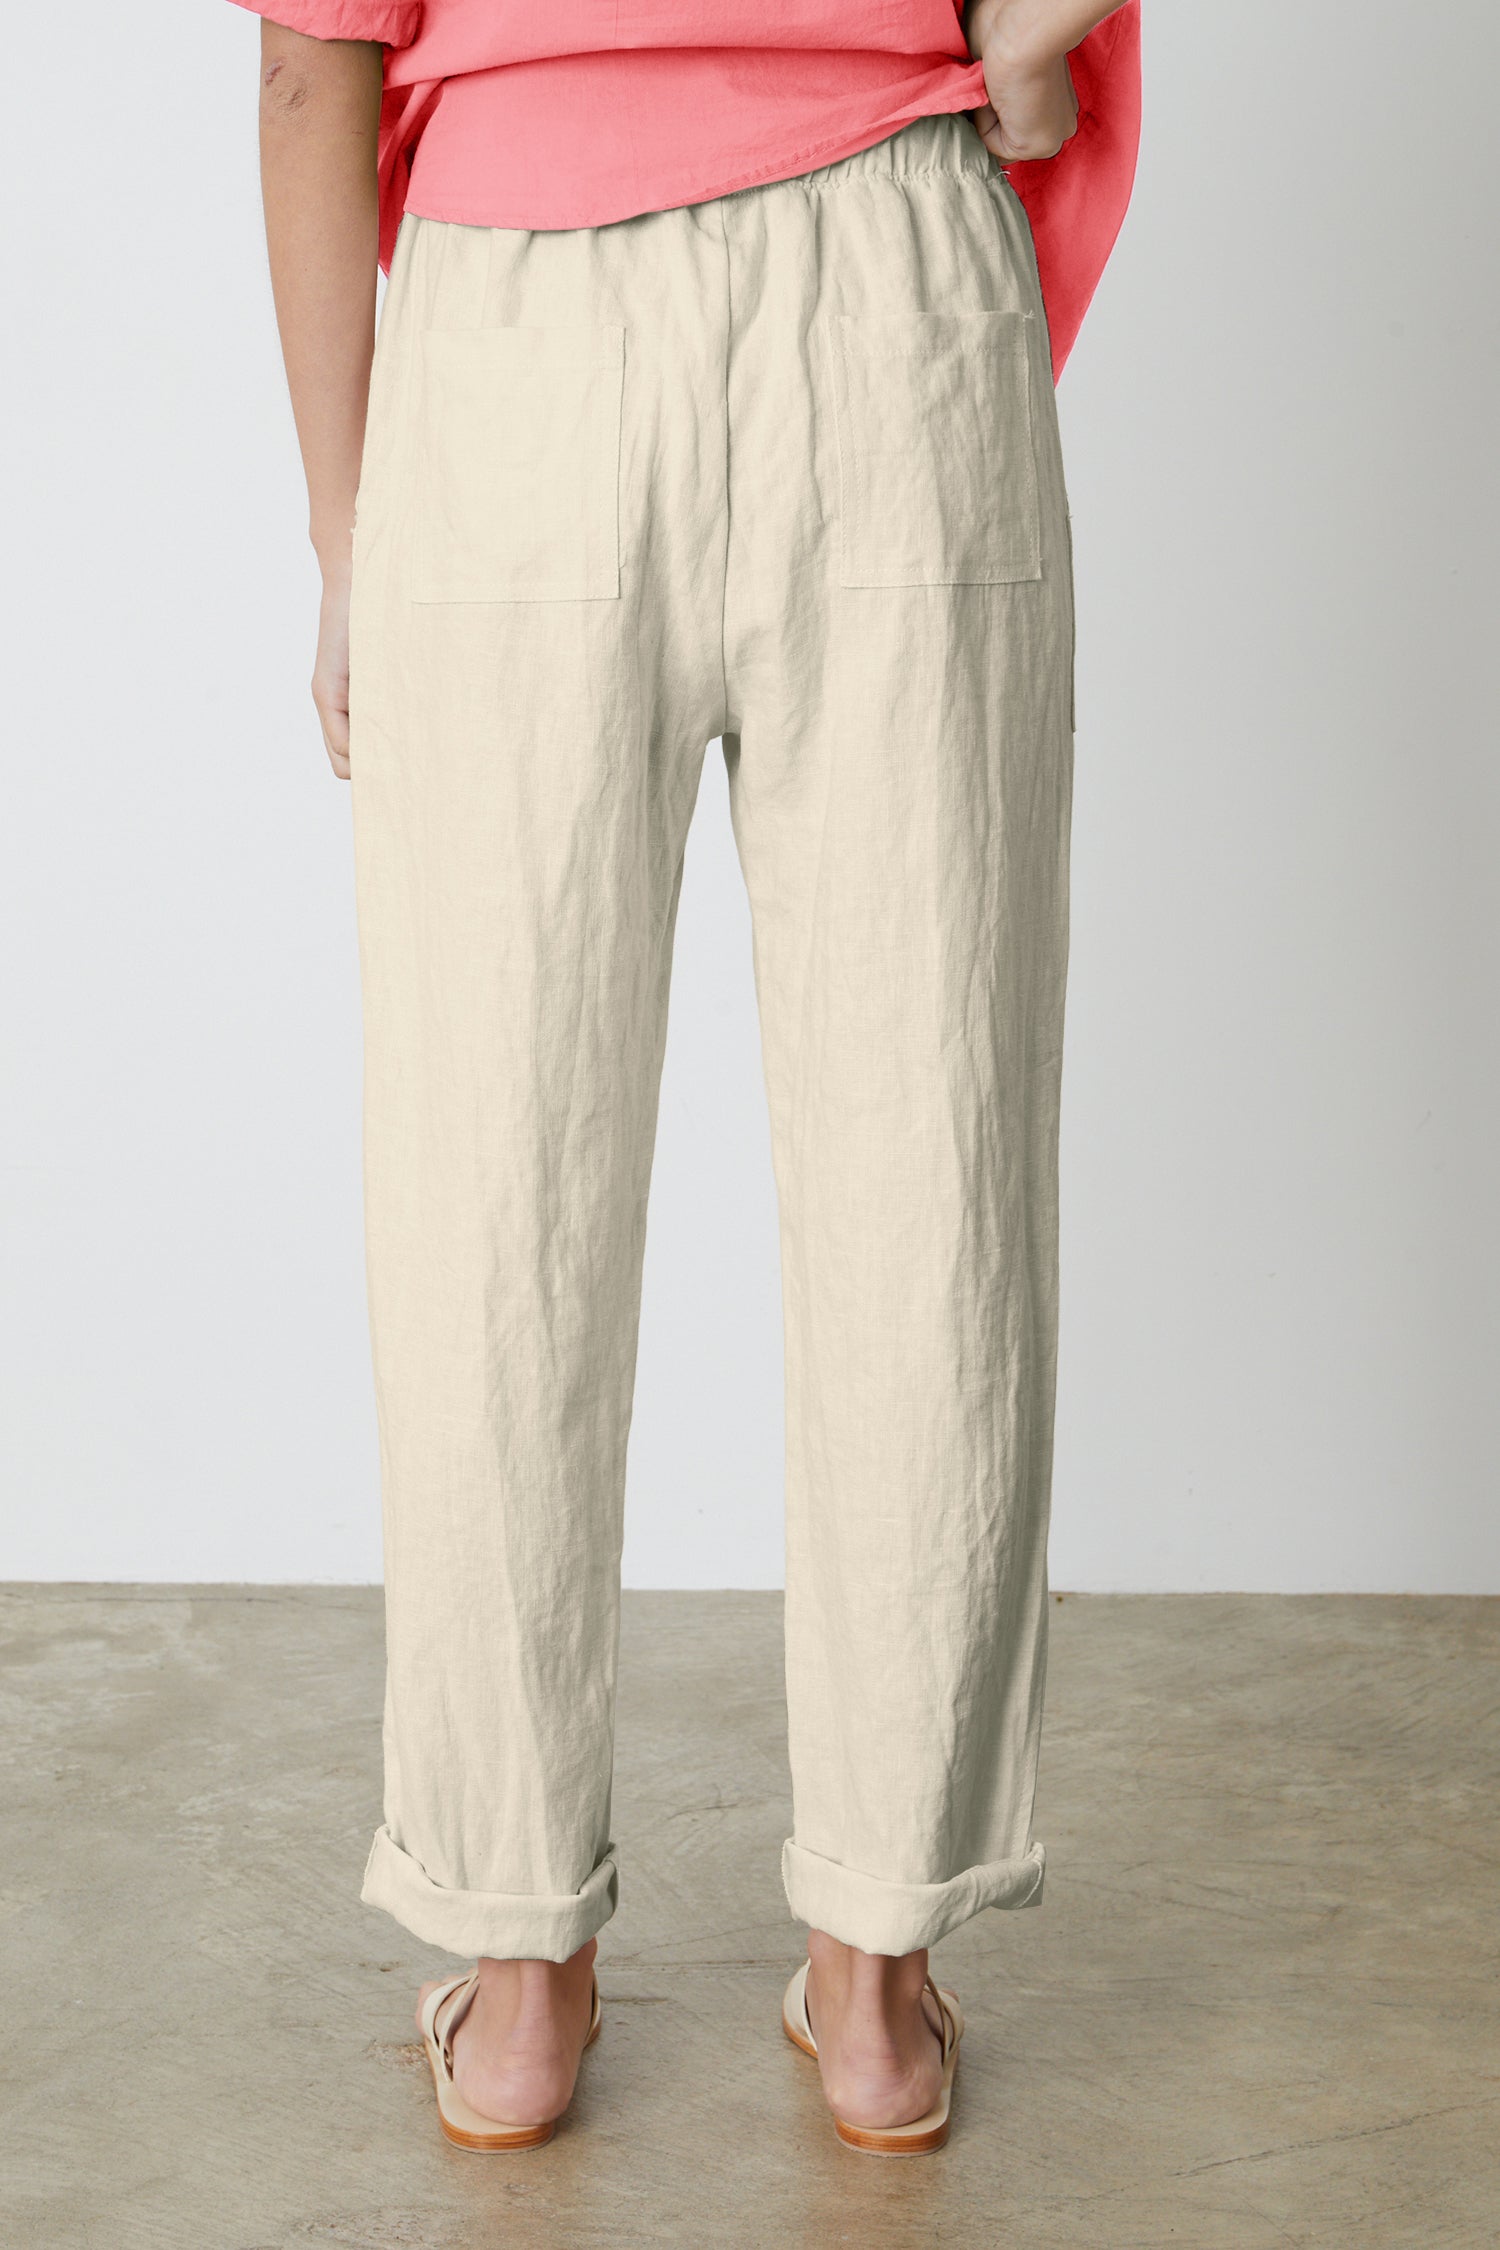 SUNSEA 20ss linen wide straight pants - スラックス